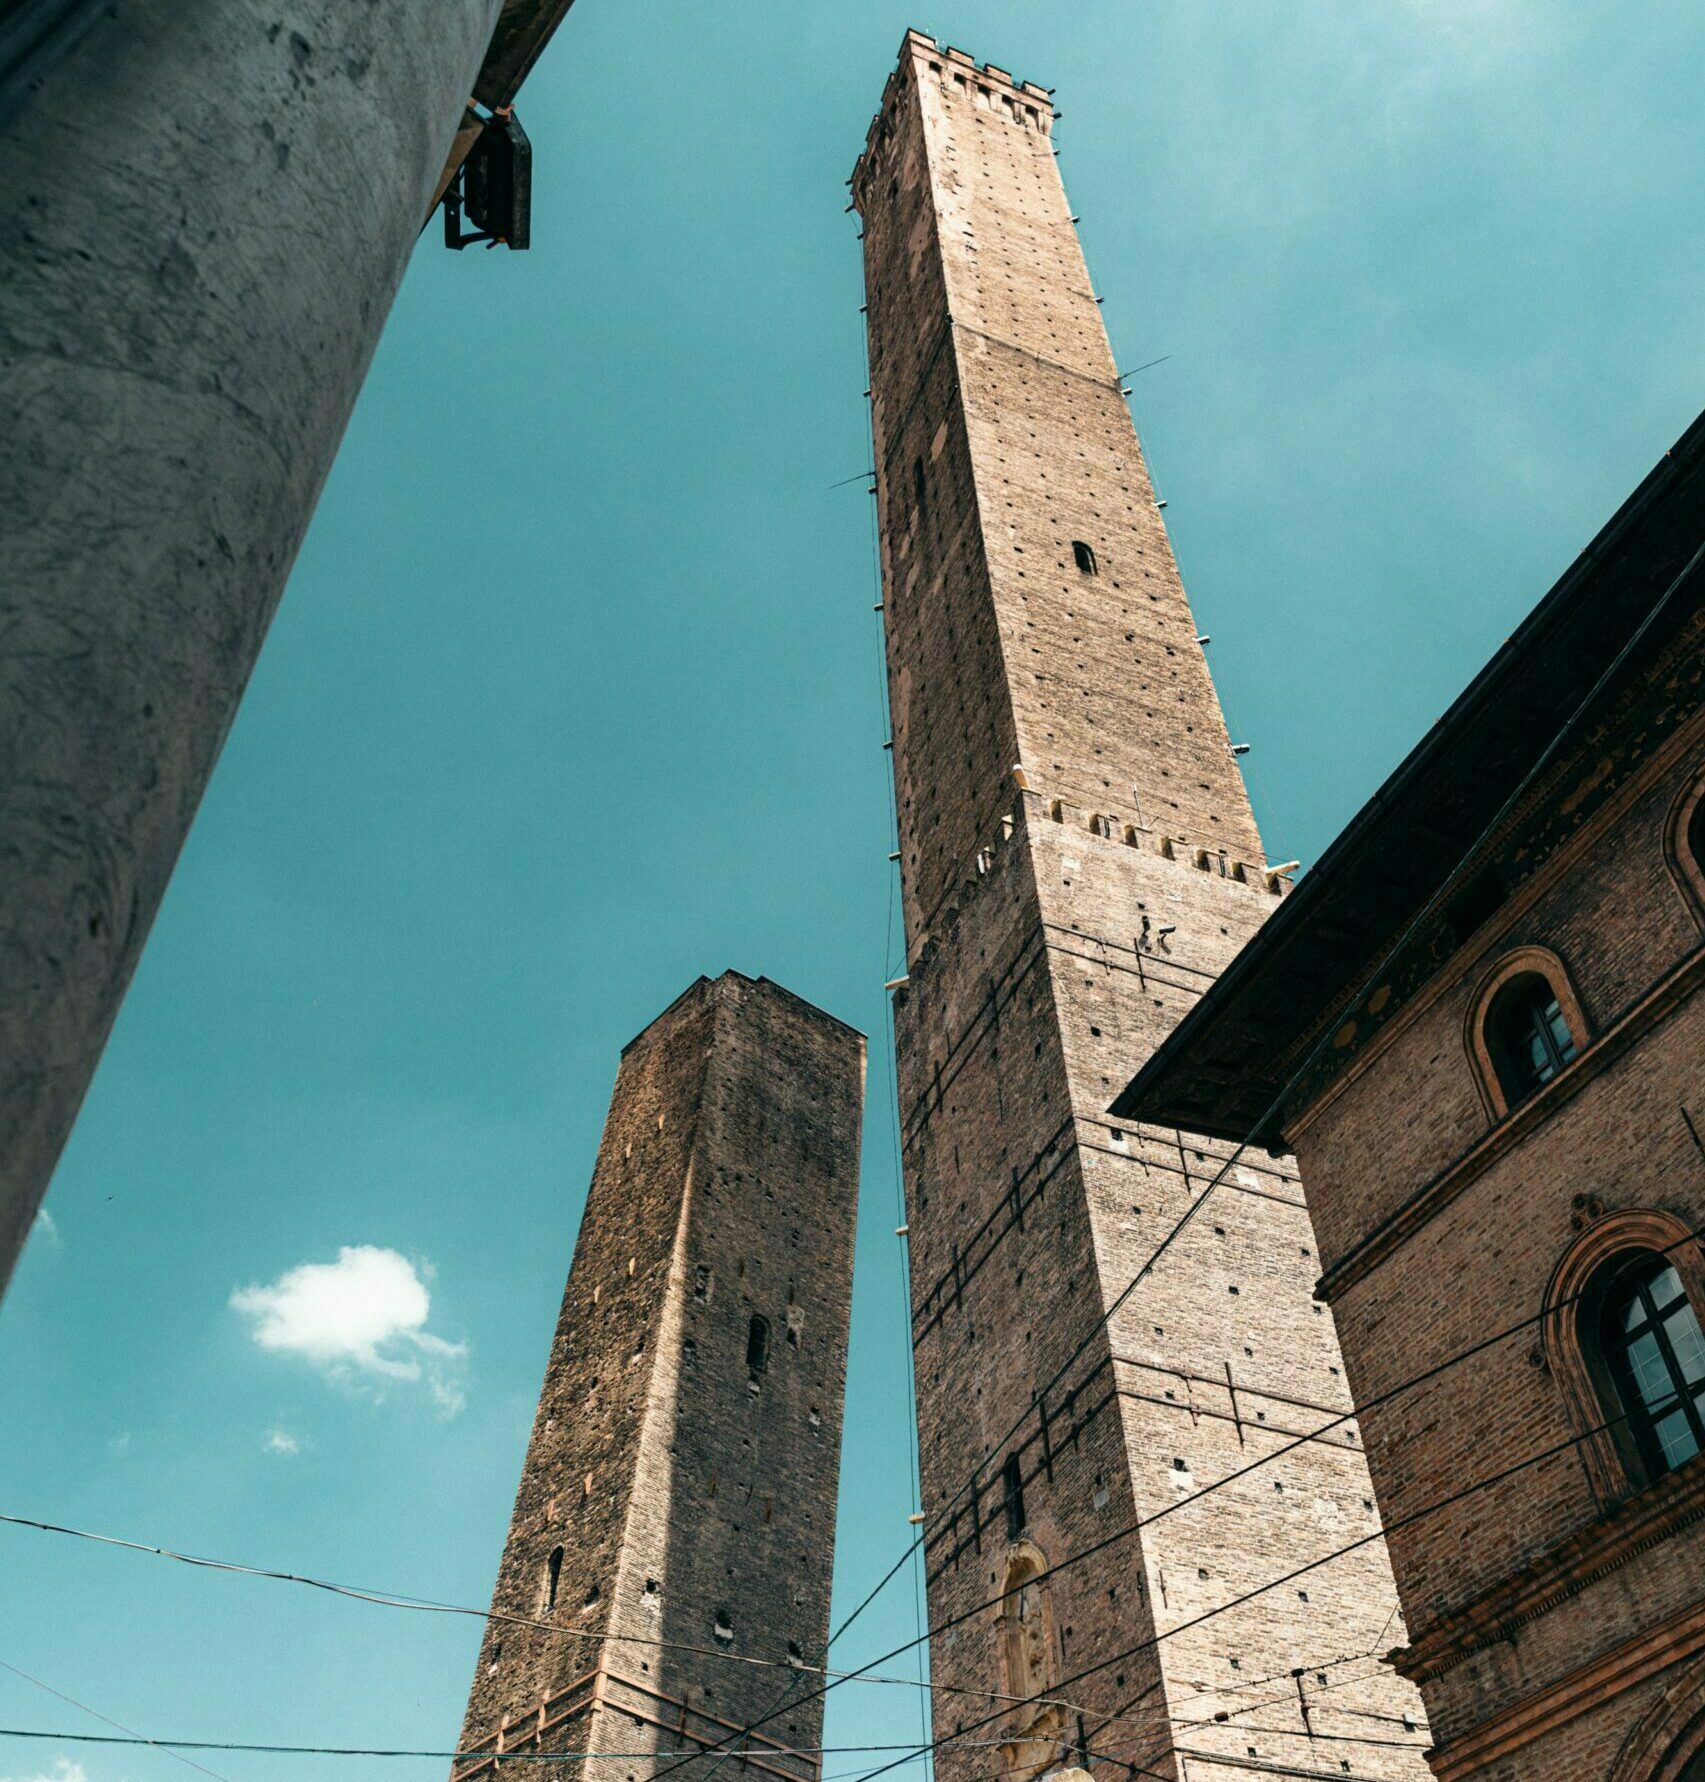 the two towers garisenda and degli asinelli